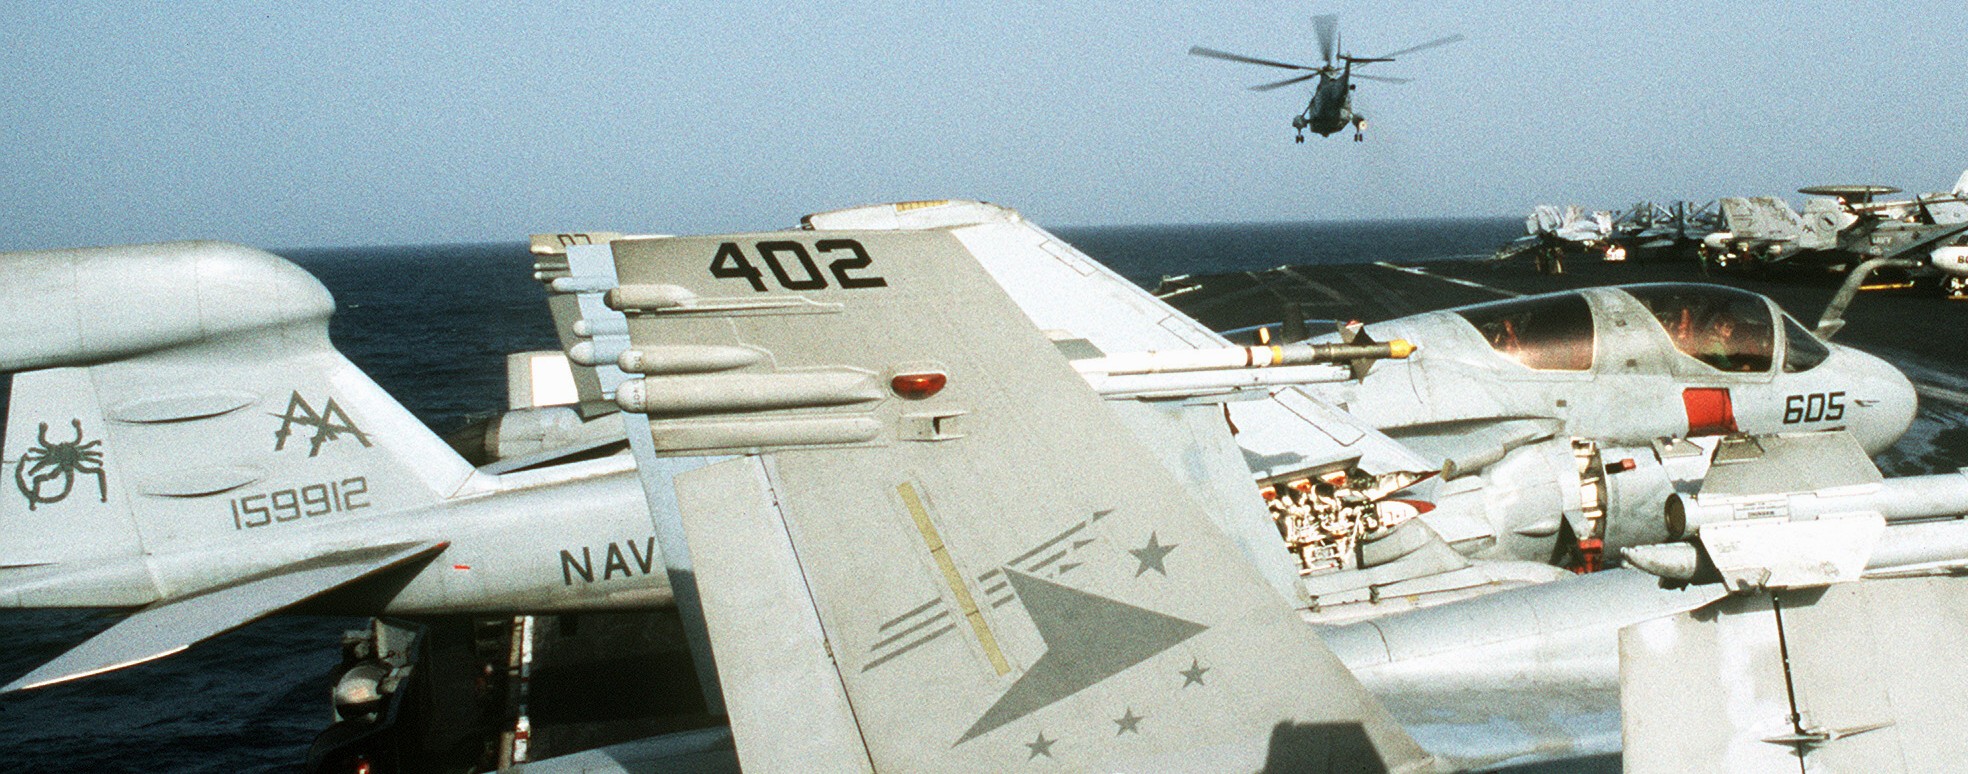 vaq-132 scorpions tactical electronic warfare squadron tacelron us navy ea-6b prowler cvw-17 uss saratoga cv-60 94 desert storm